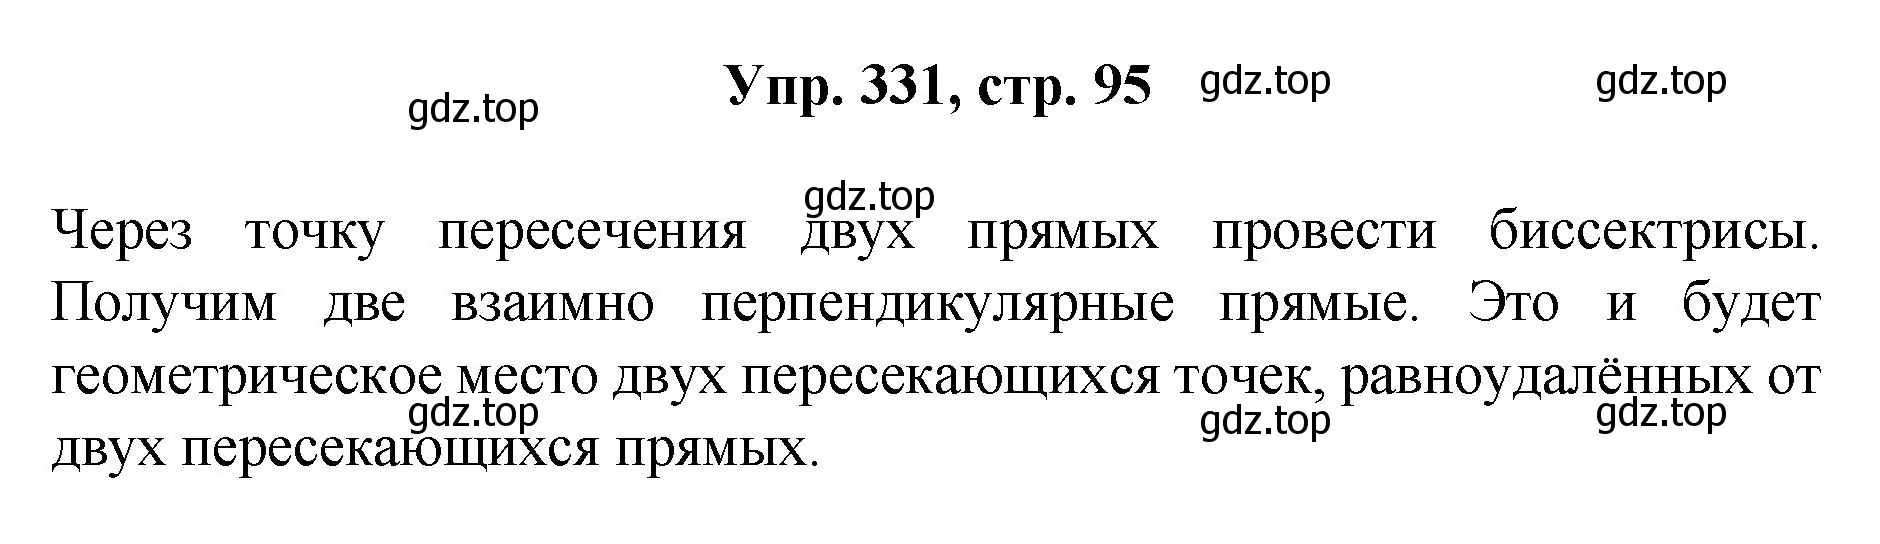 Решение номер 331 (страница 95) гдз по геометрии 7-9 класс Атанасян, Бутузов, учебник